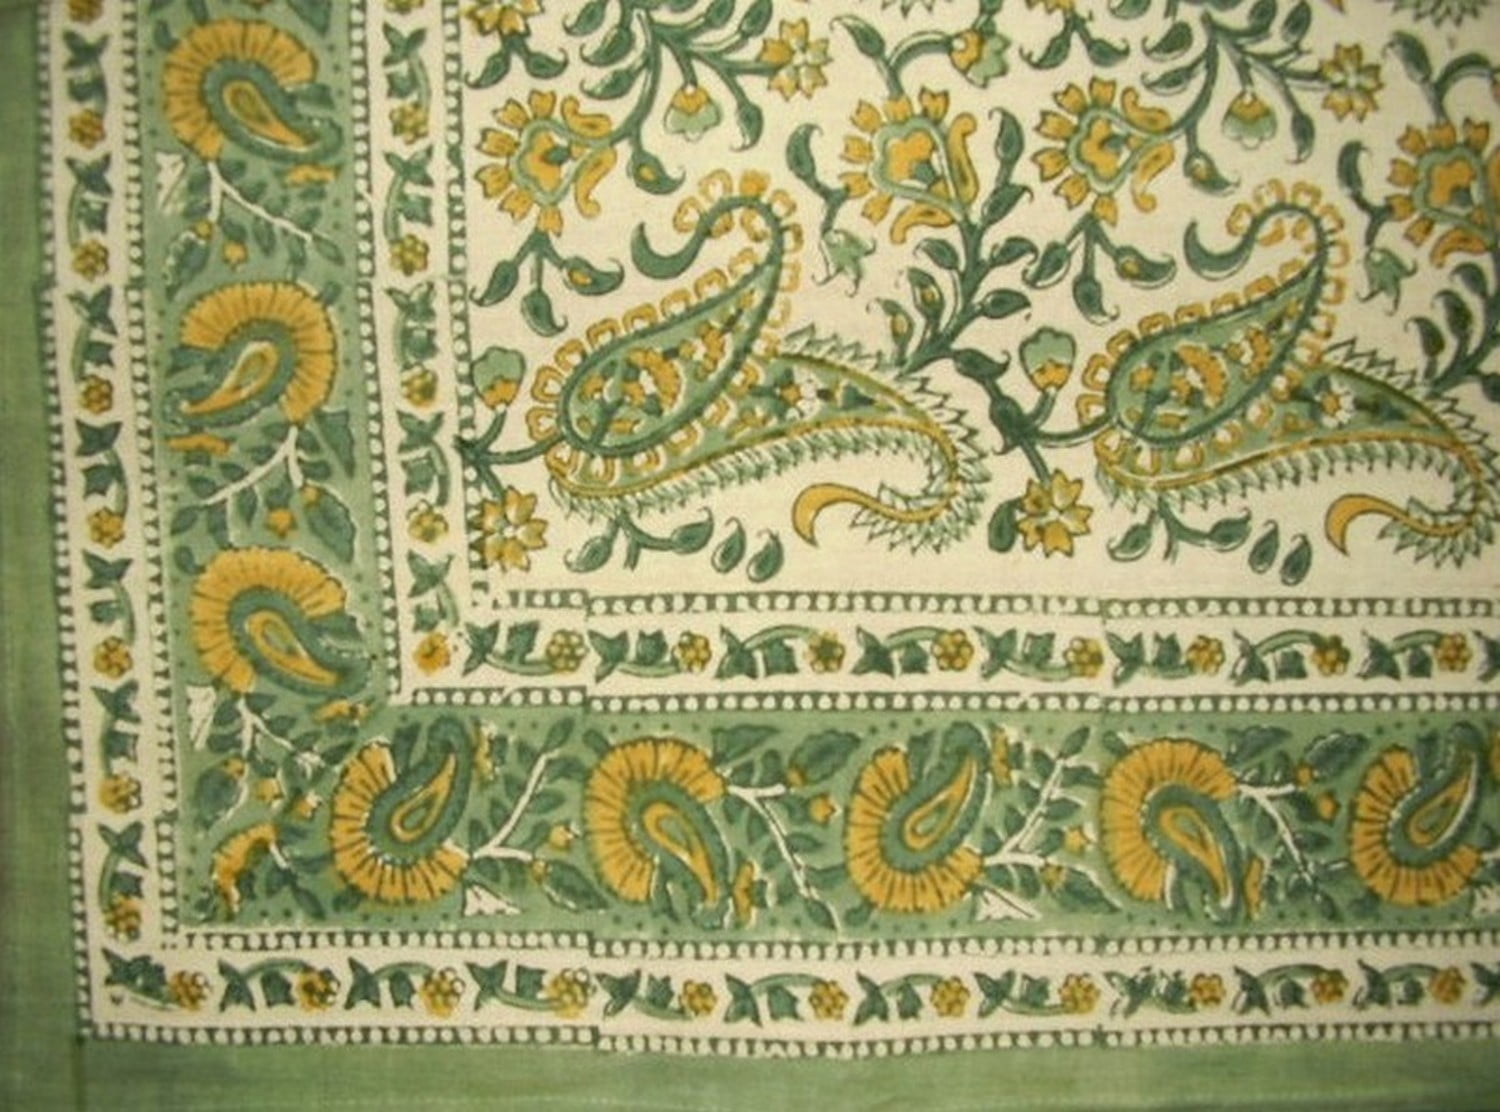 Rajasthan Block Print Square Cotton Tablecloth 60/" x 60/" Blue